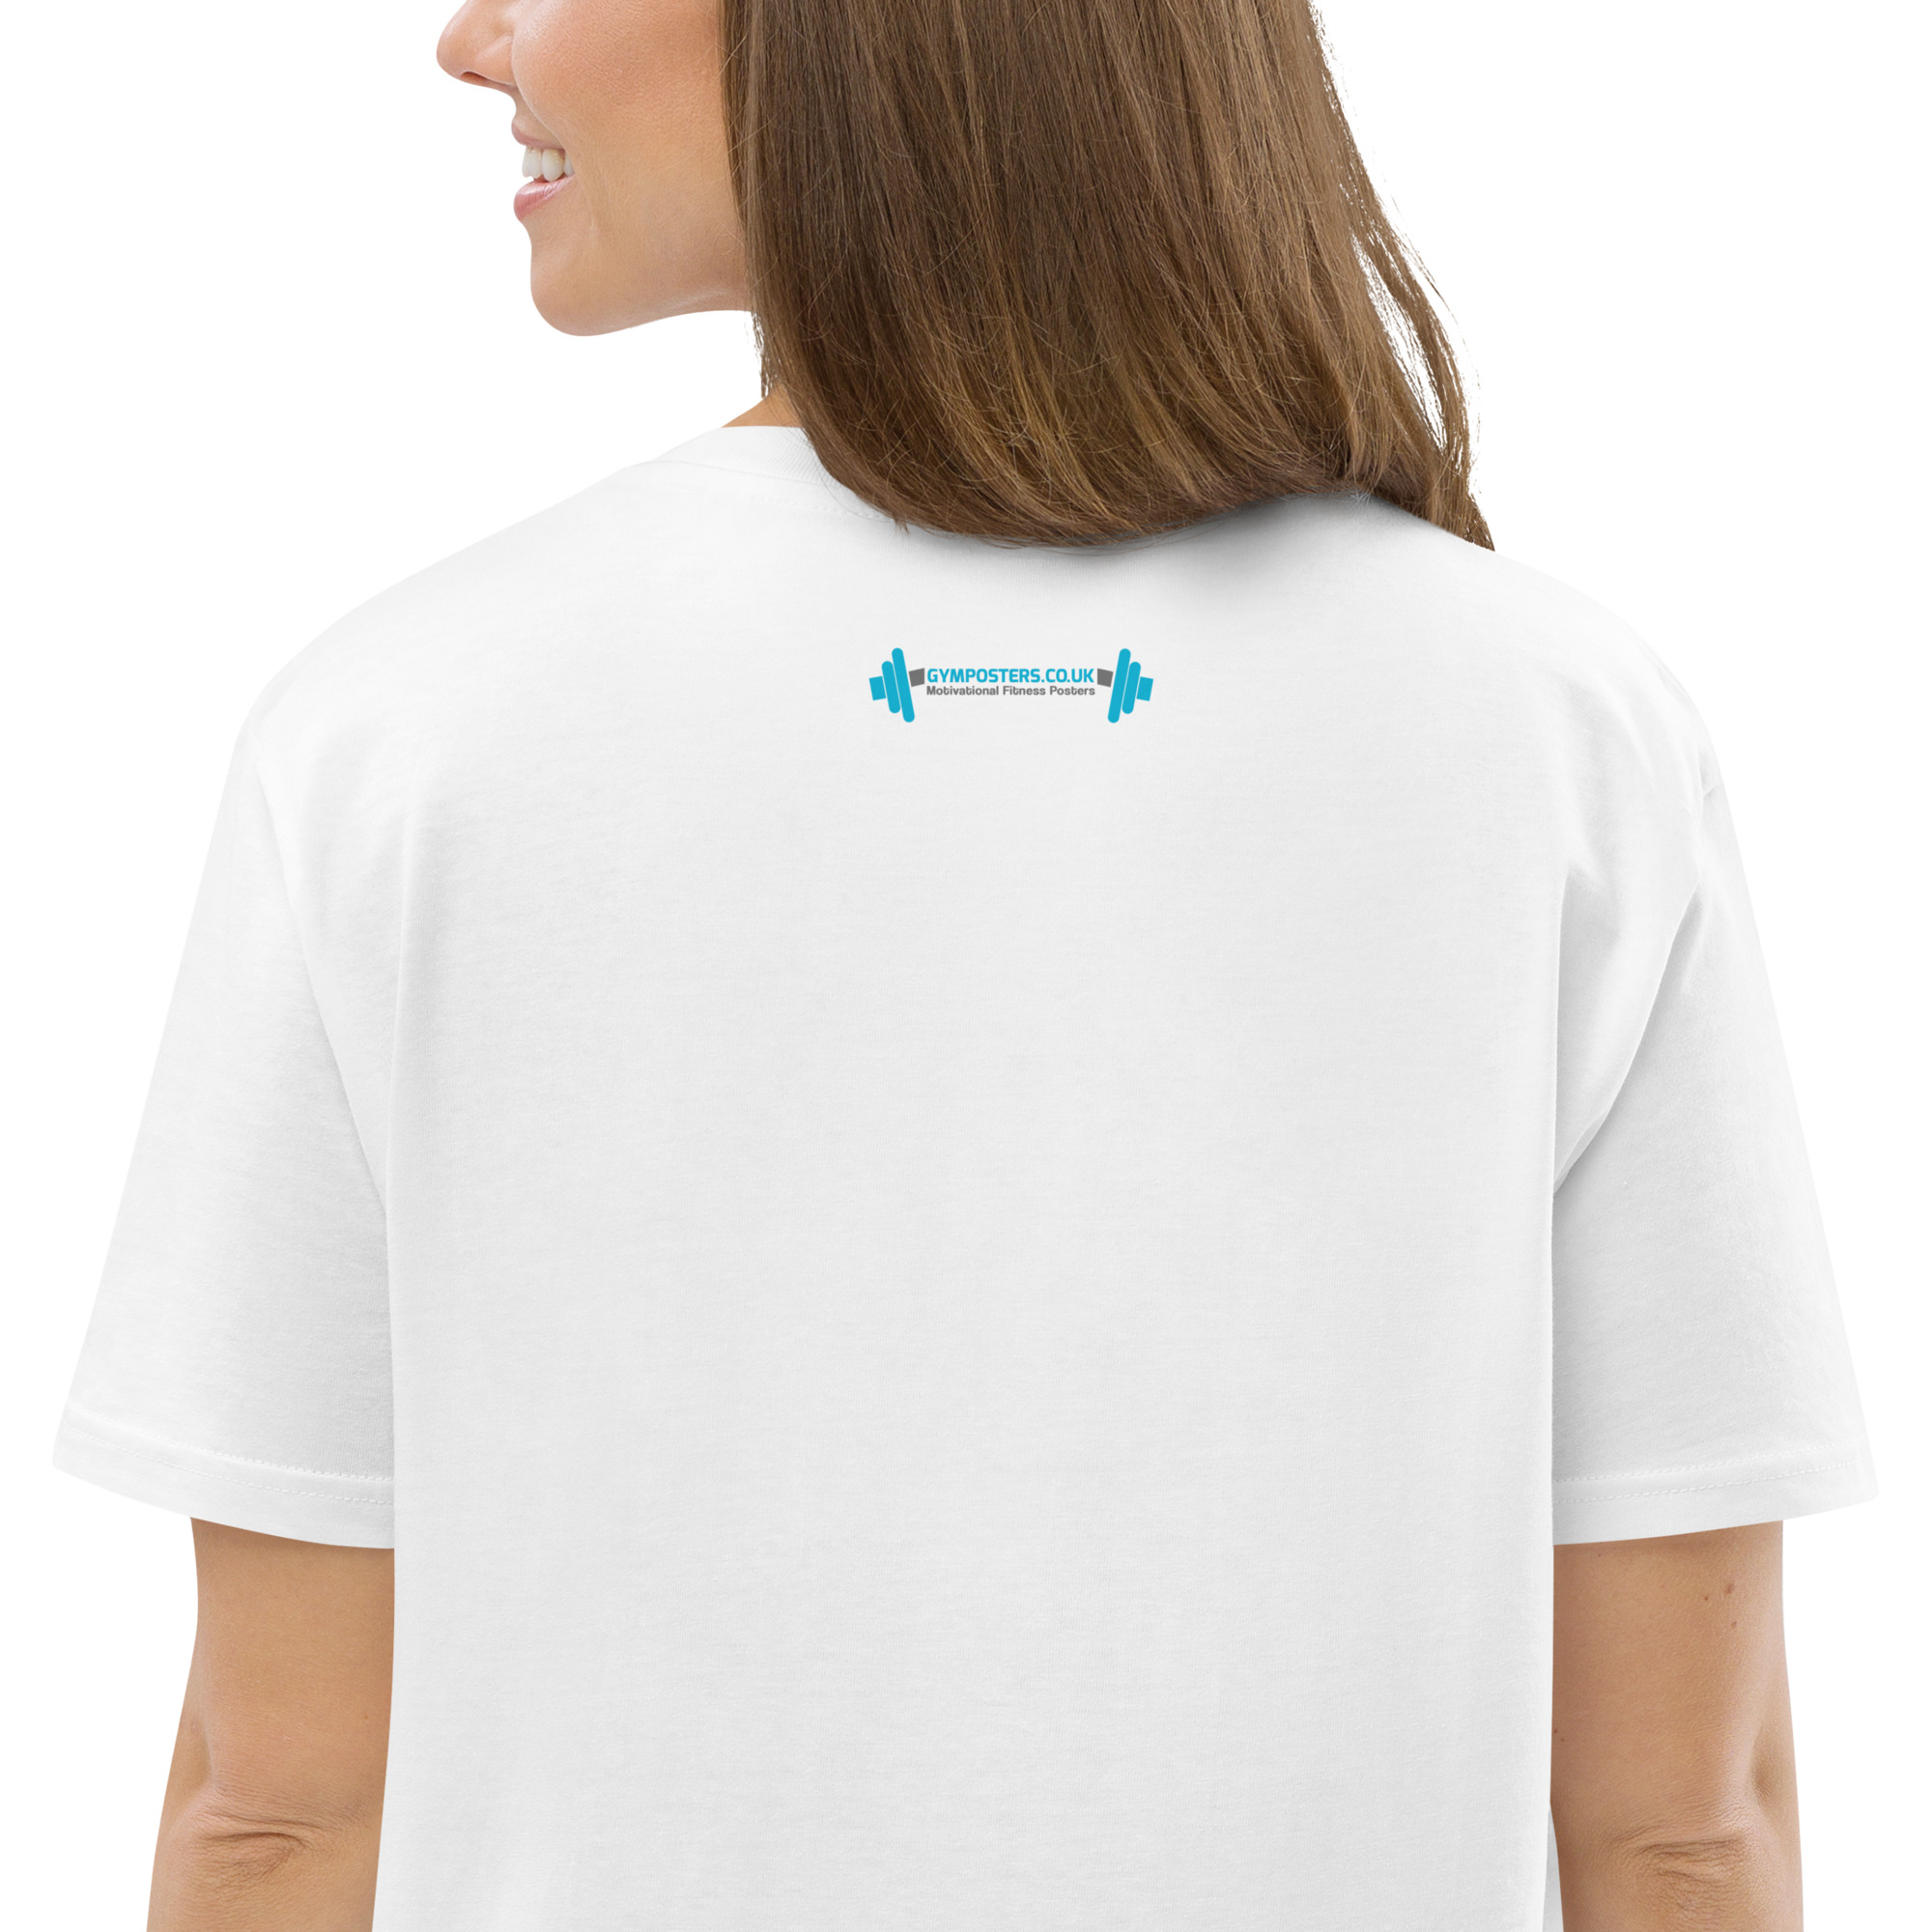 unisex-organic-cotton-t-shirt-white-zoomed-in-657852a6bafe6.jpg